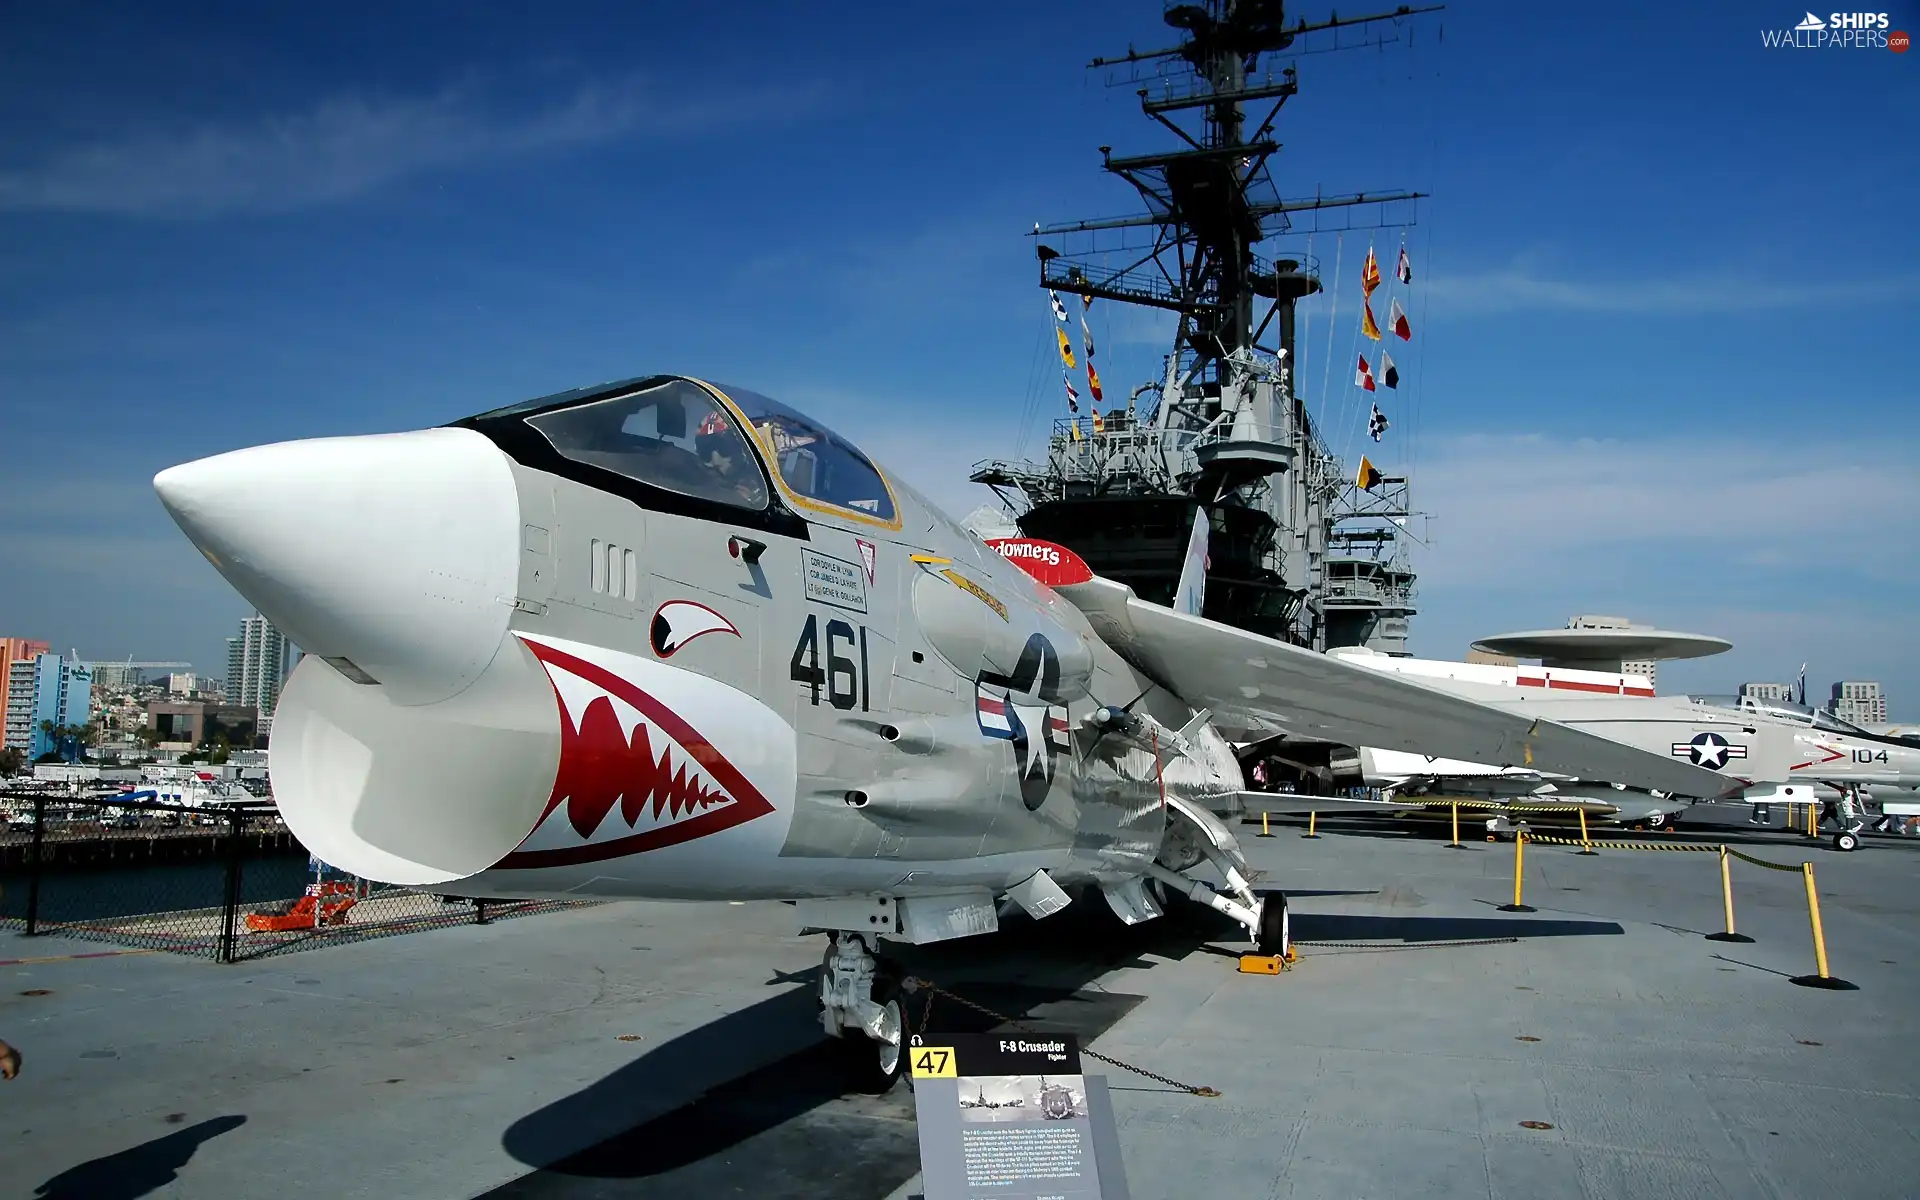 Vought F-8 Crusader, aircraft carrier, USS Midway